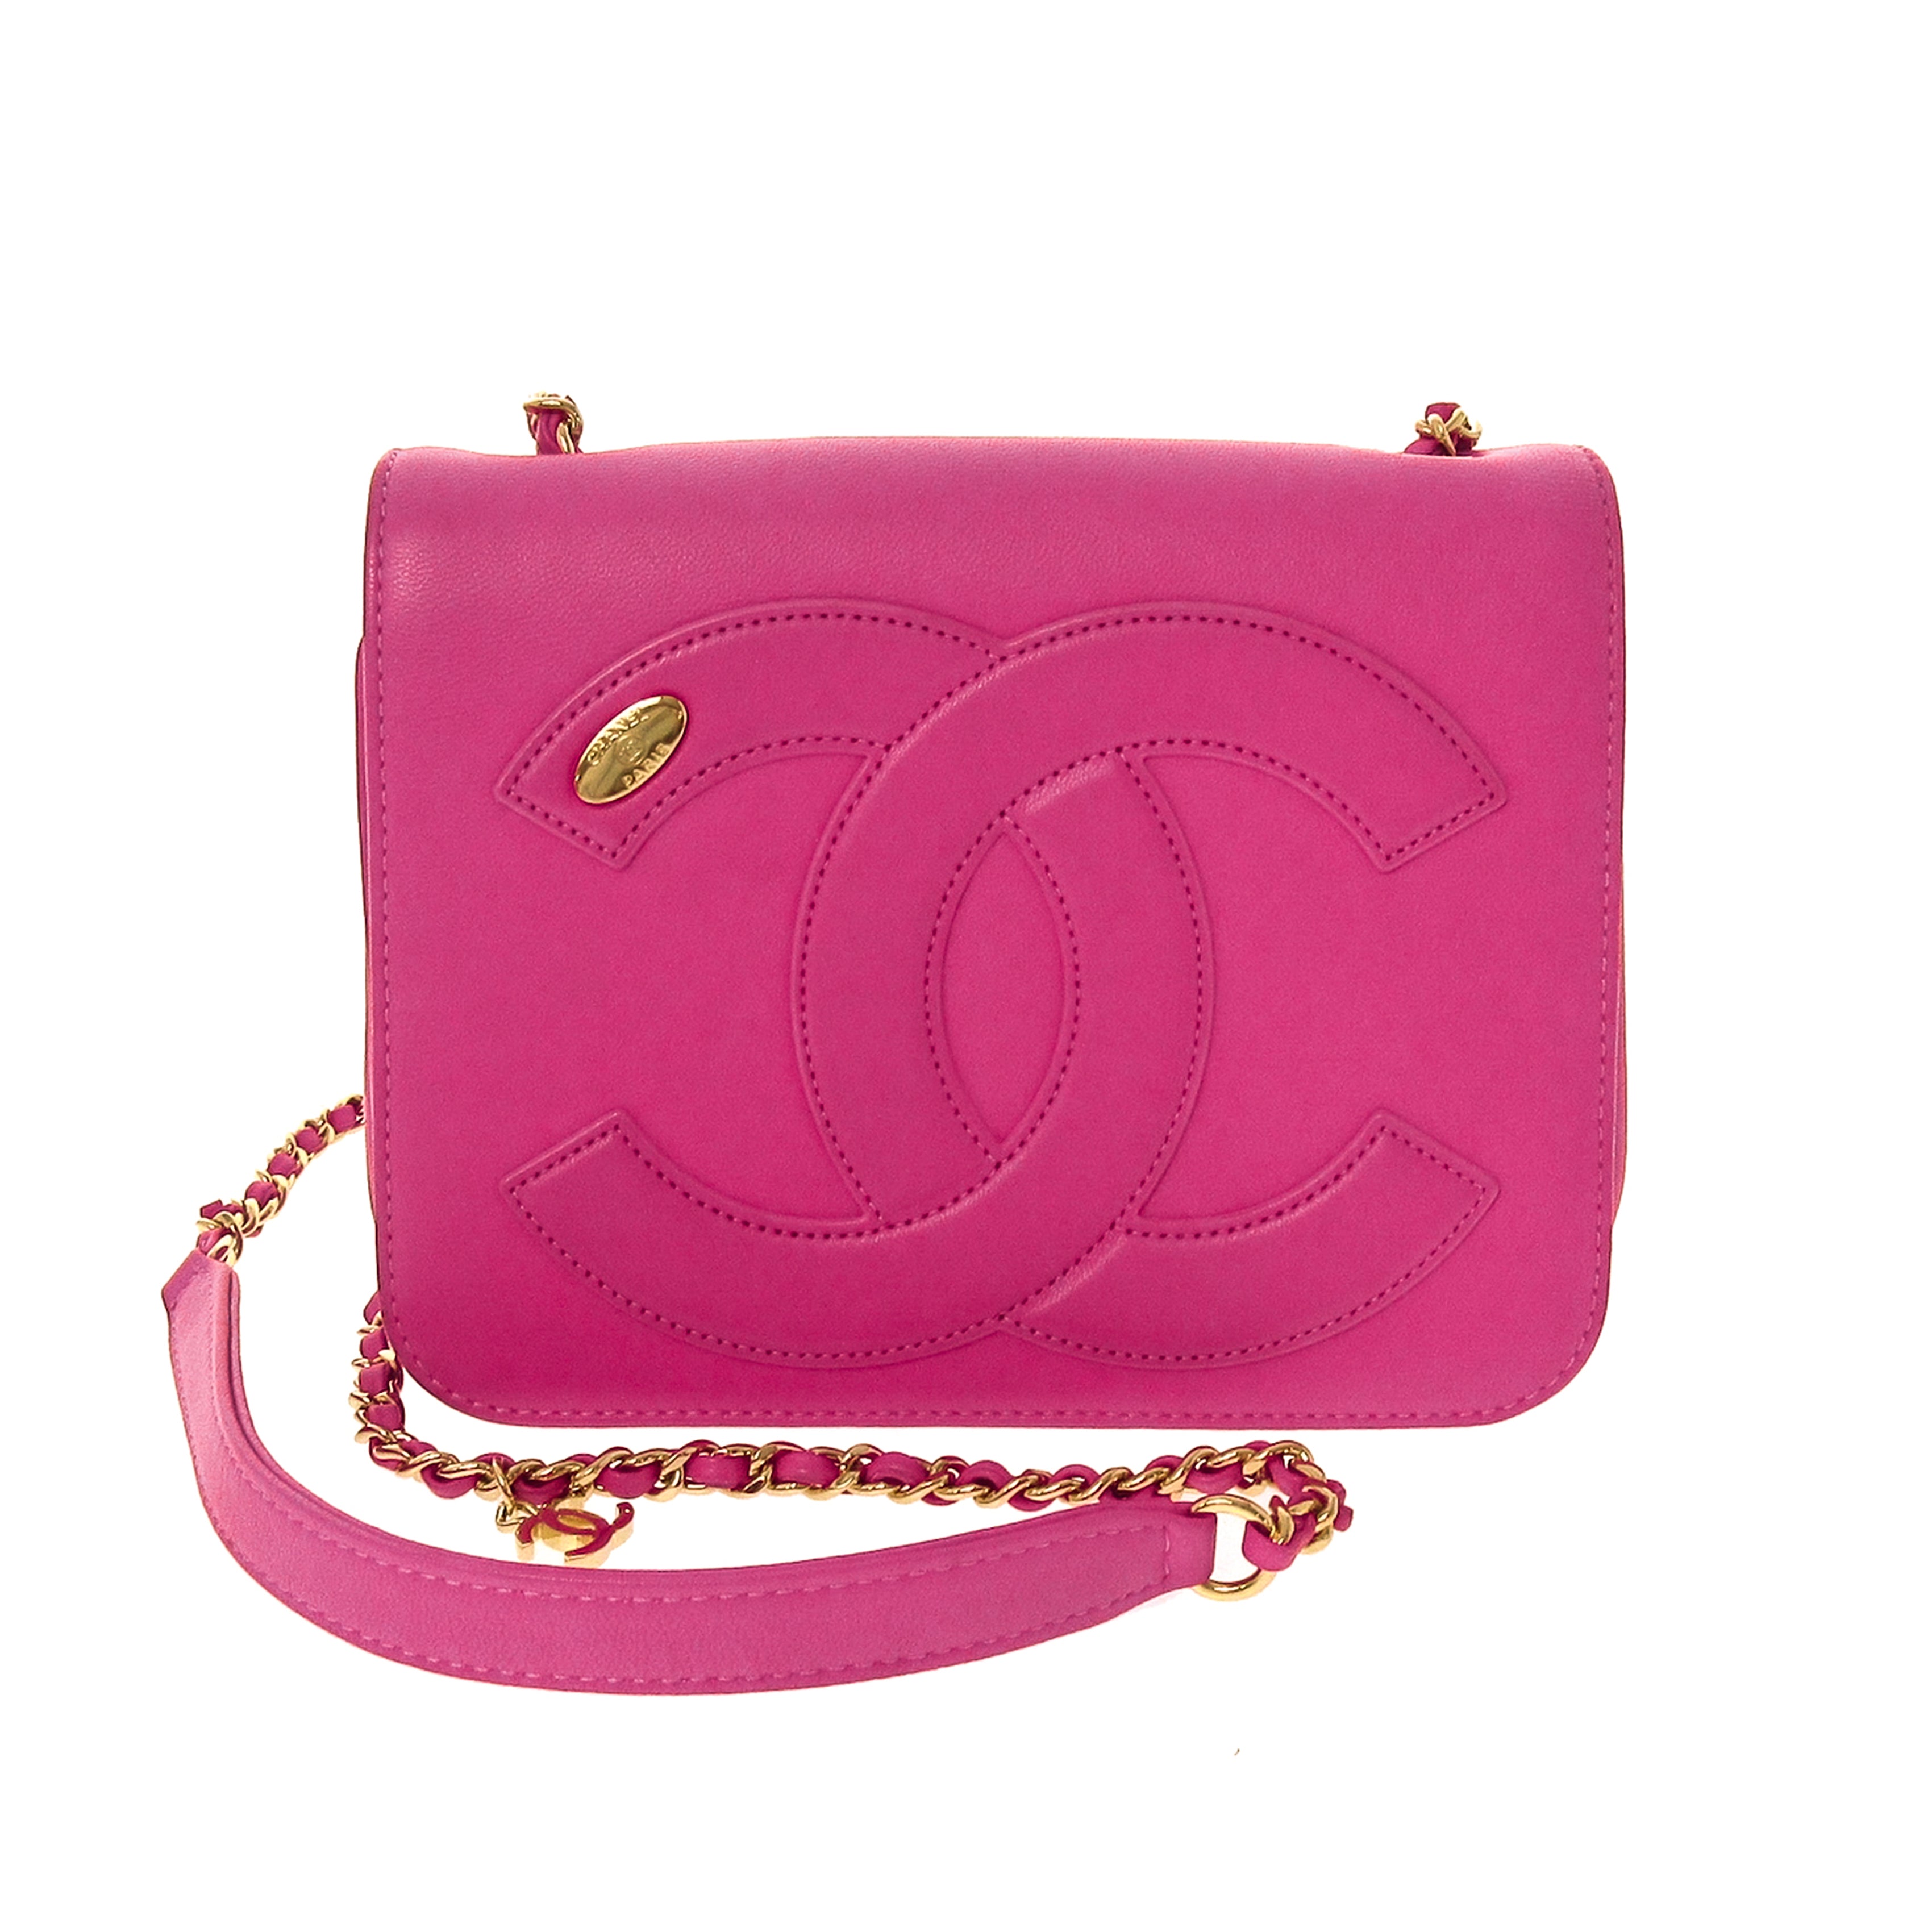 Chanel CC Mania Crossbody bag in Hot Pink | Vault 55